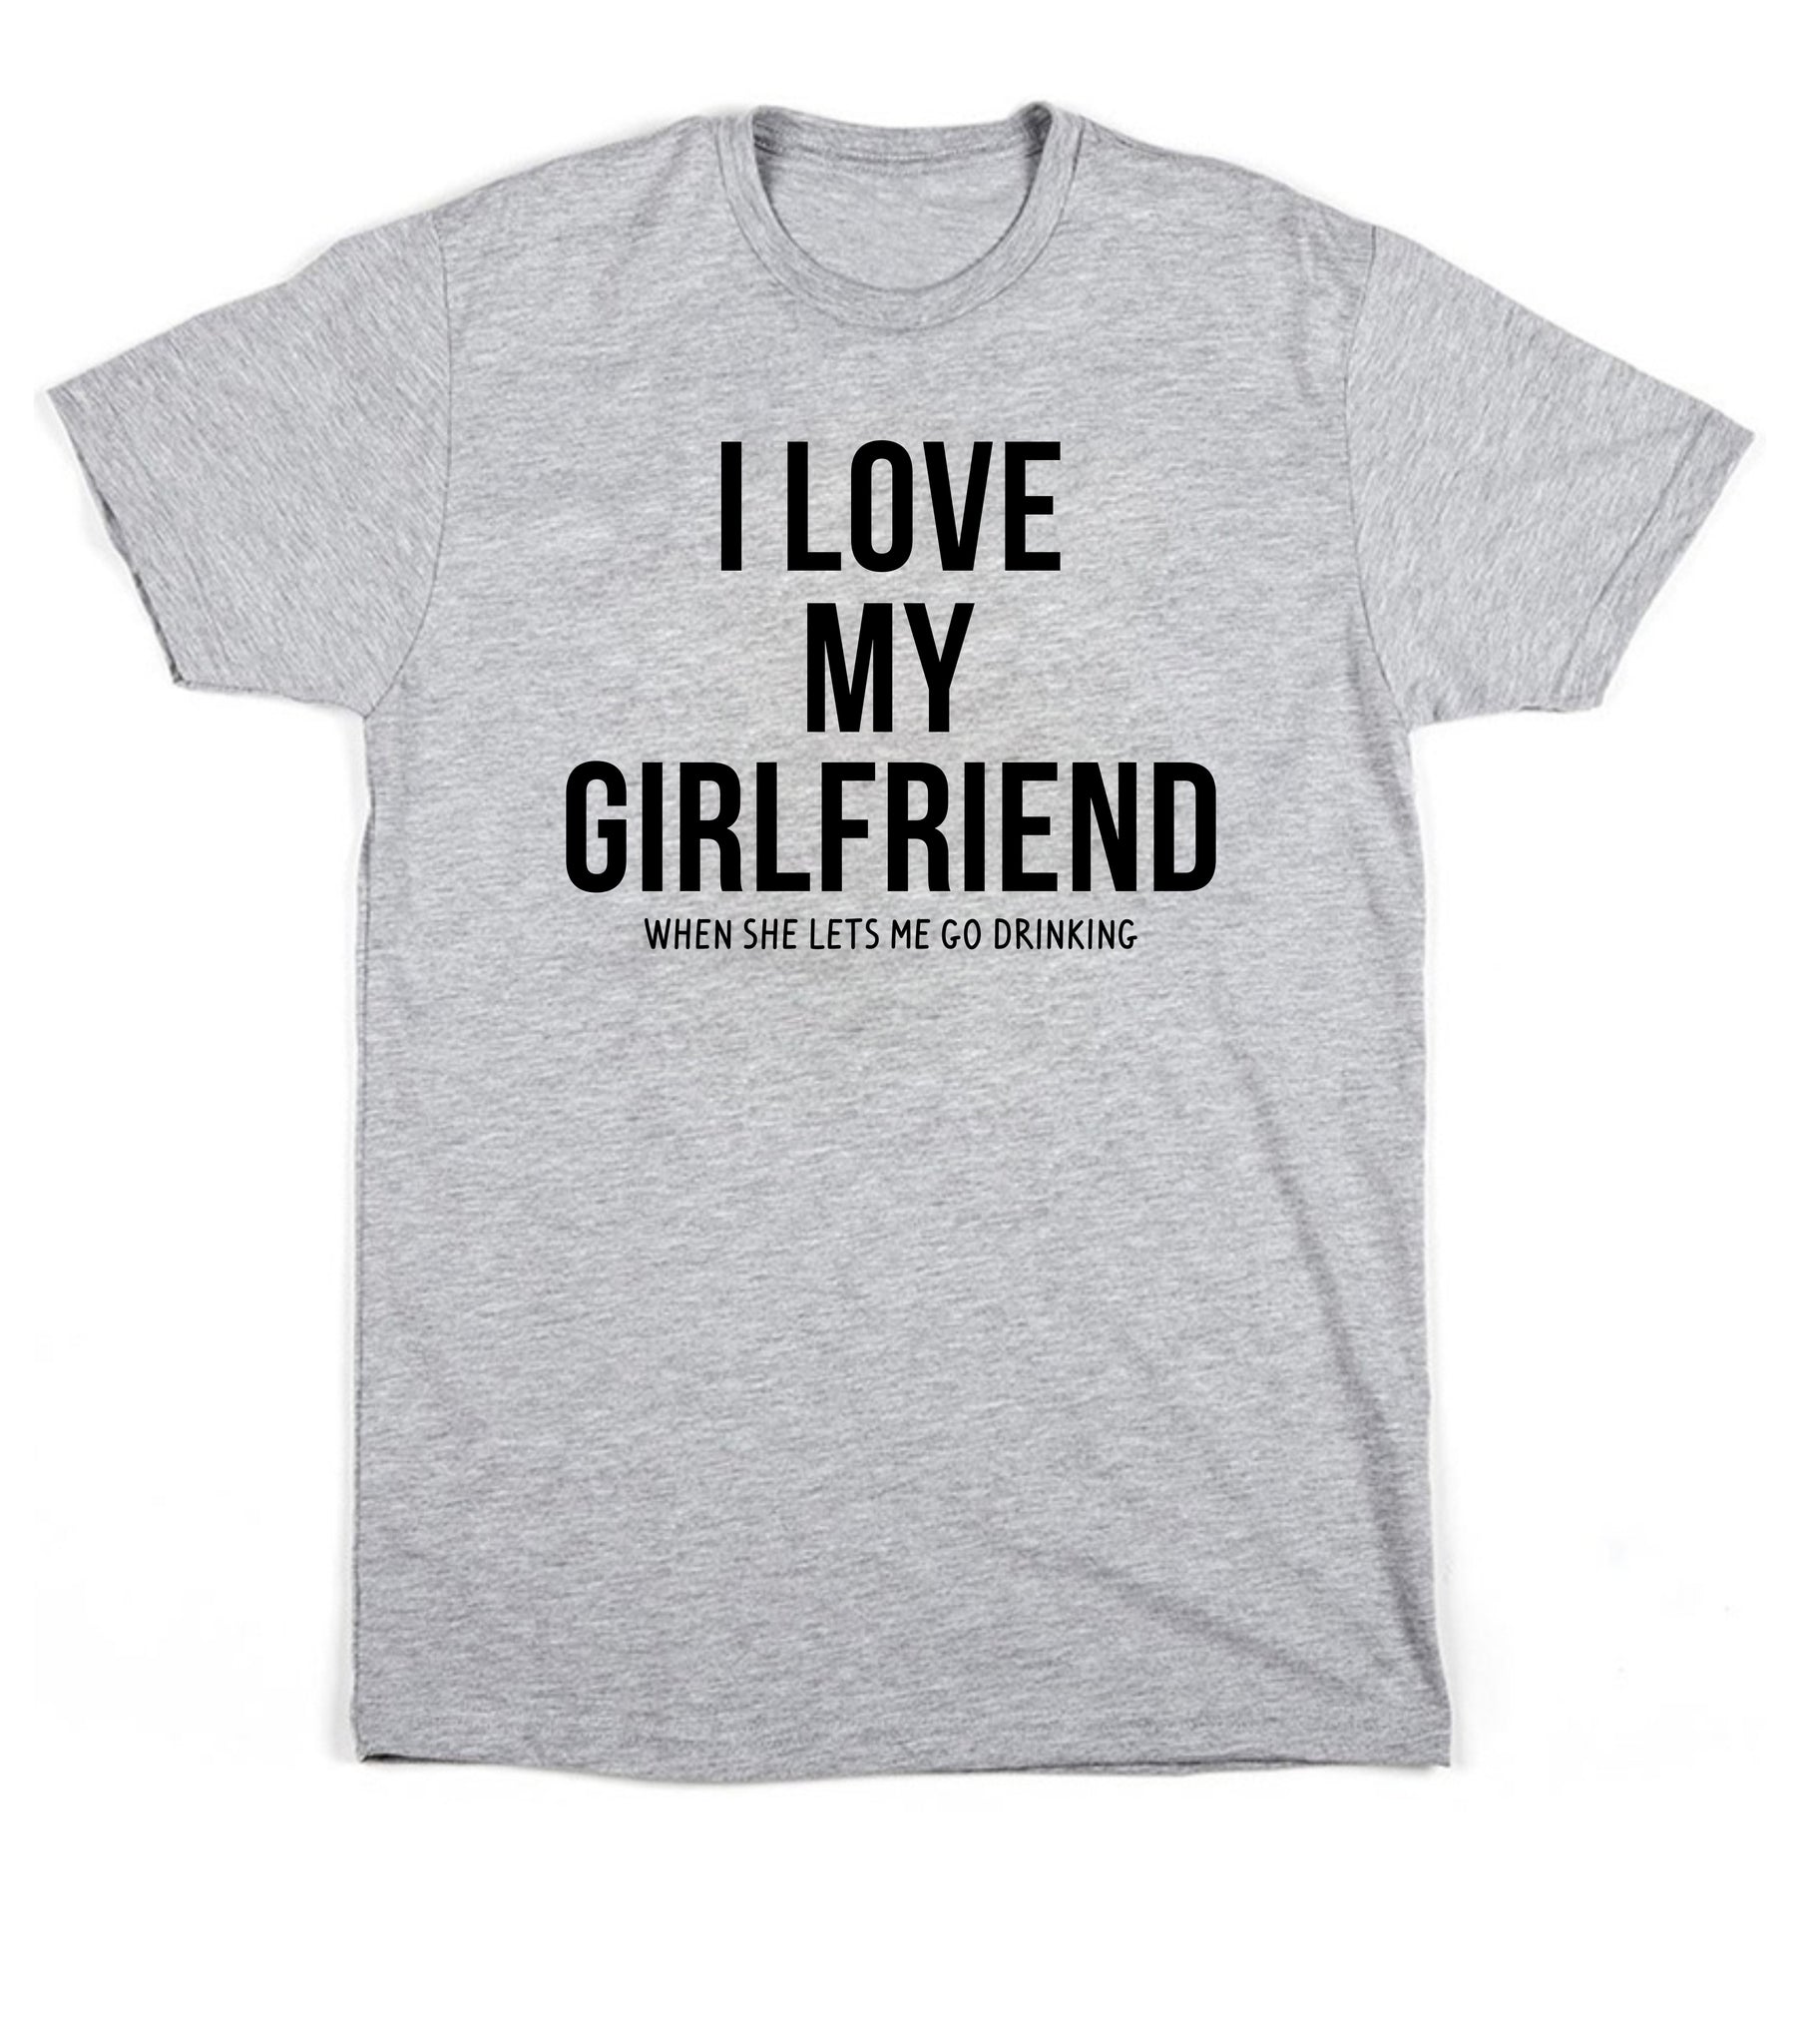 I Love my girlfriend when she lets me go drinking, Men's T-shirt